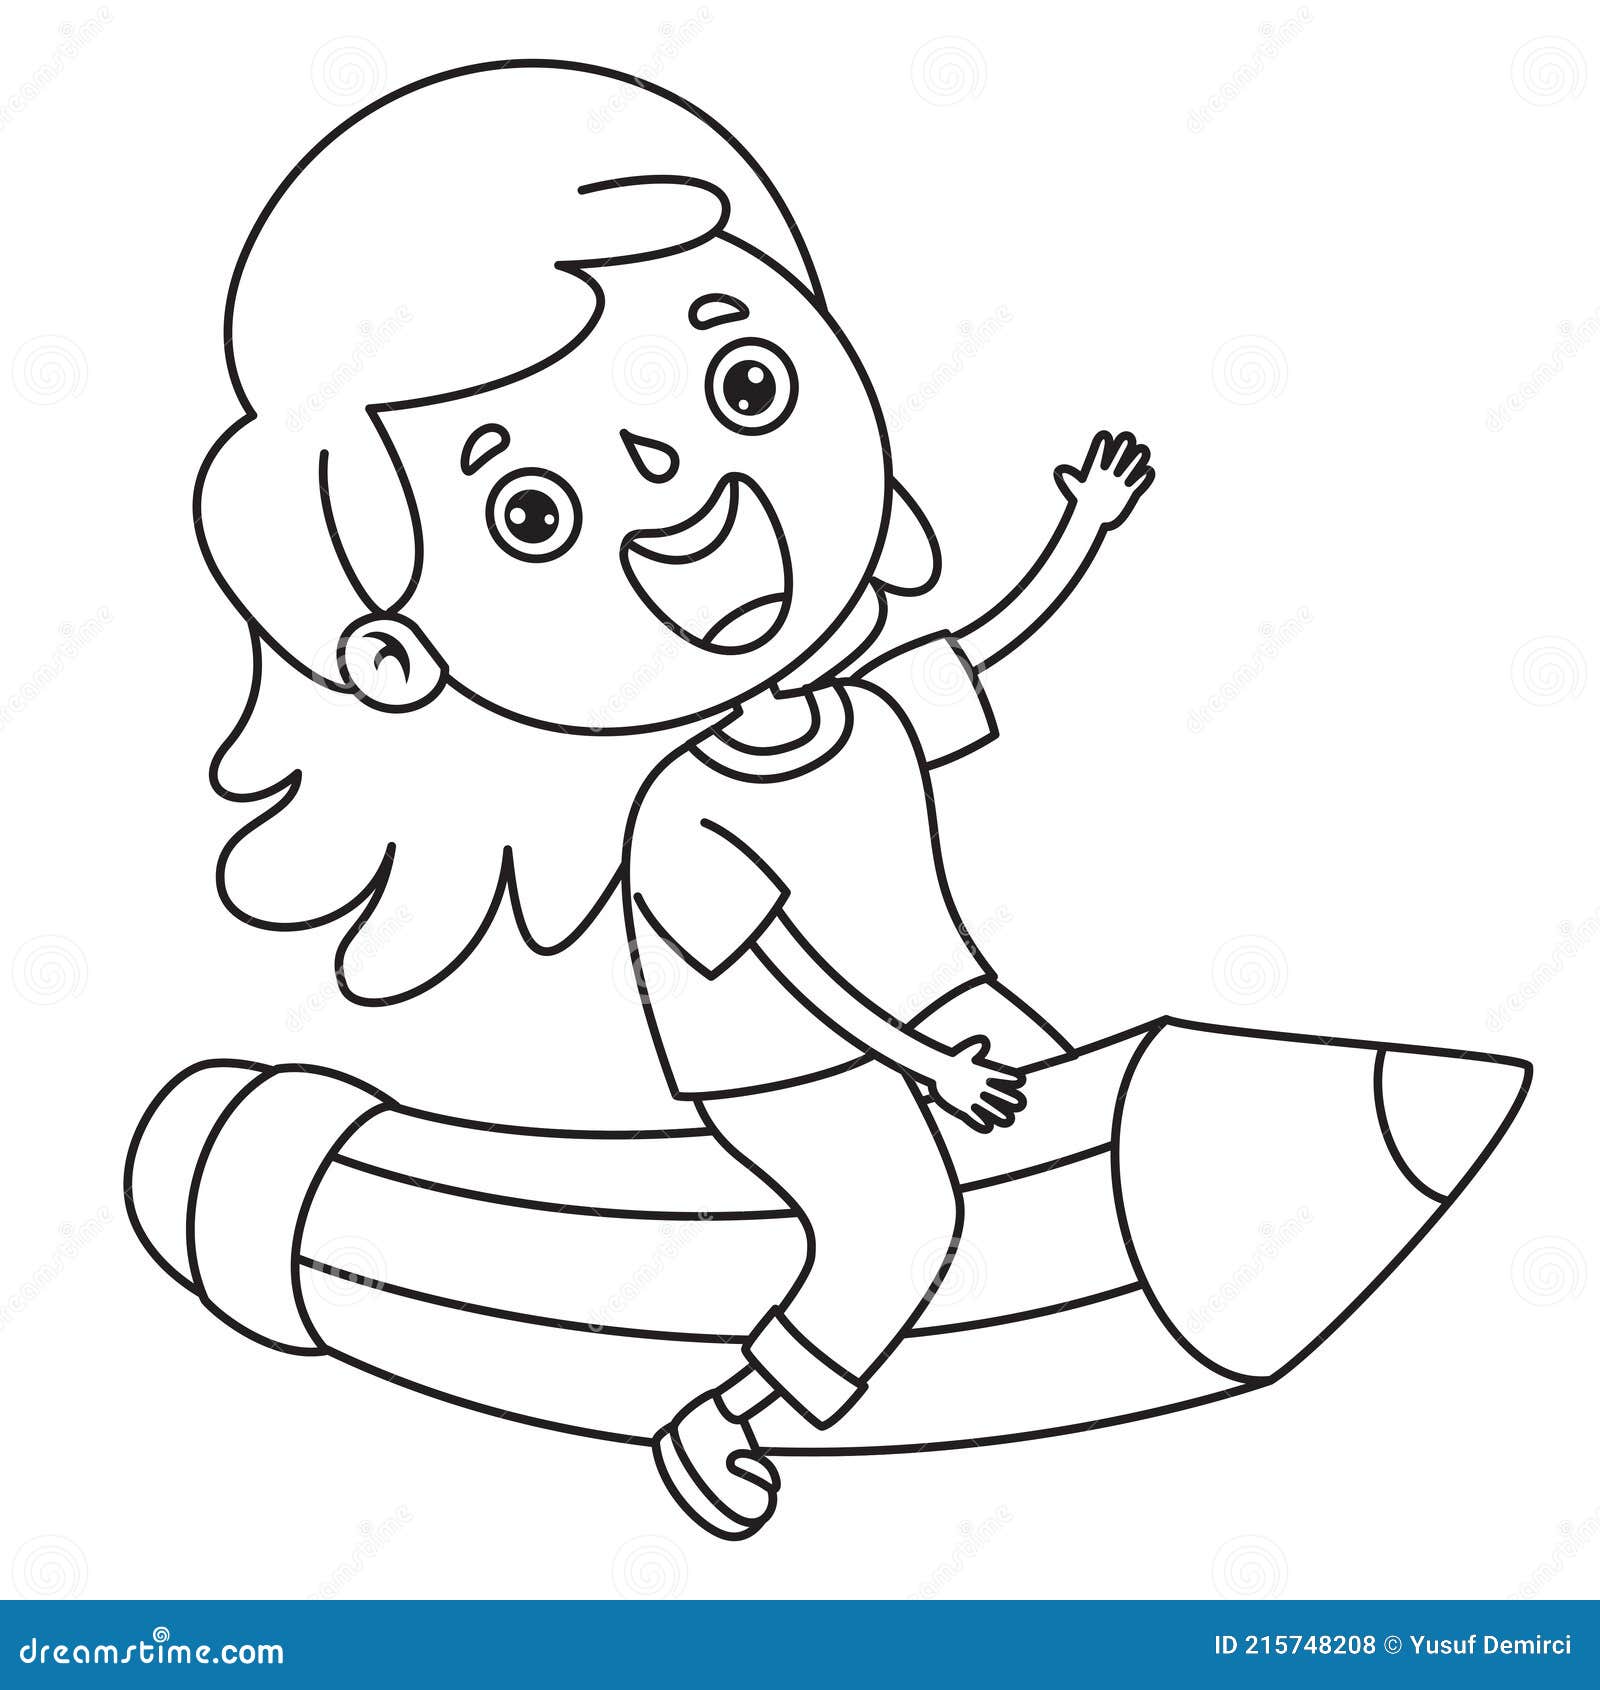 https://thumbs.dreamstime.com/z/line-art-drawing-kids-coloring-page-line-art-drawing-kids-coloring-page-eps-215748208.jpg